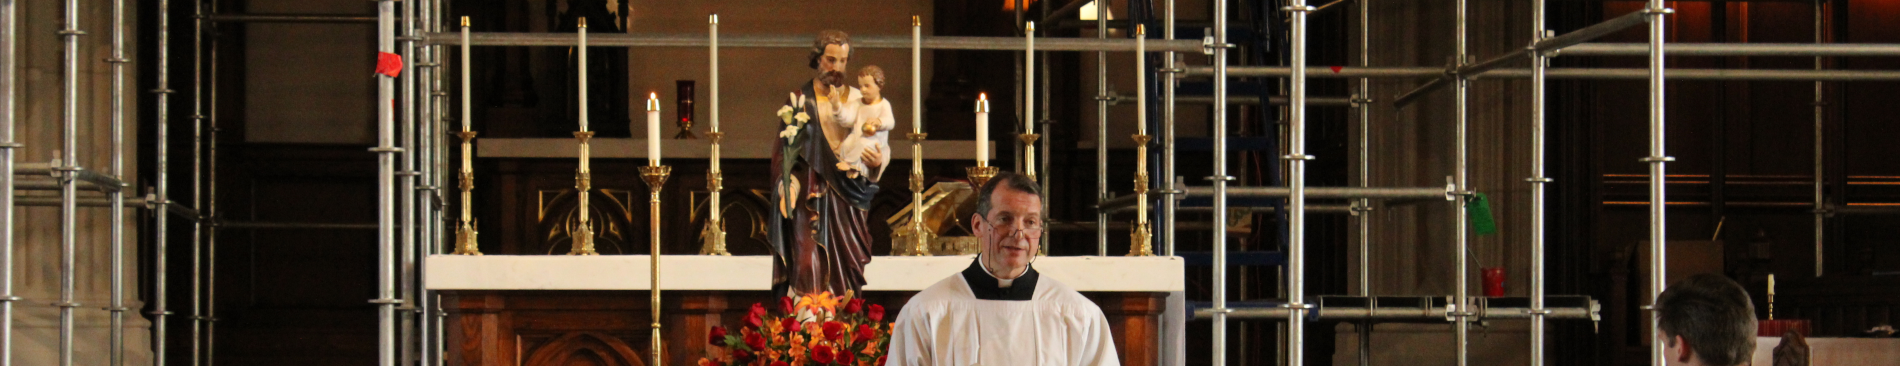 Fr. Markey with statue of St. Joseph